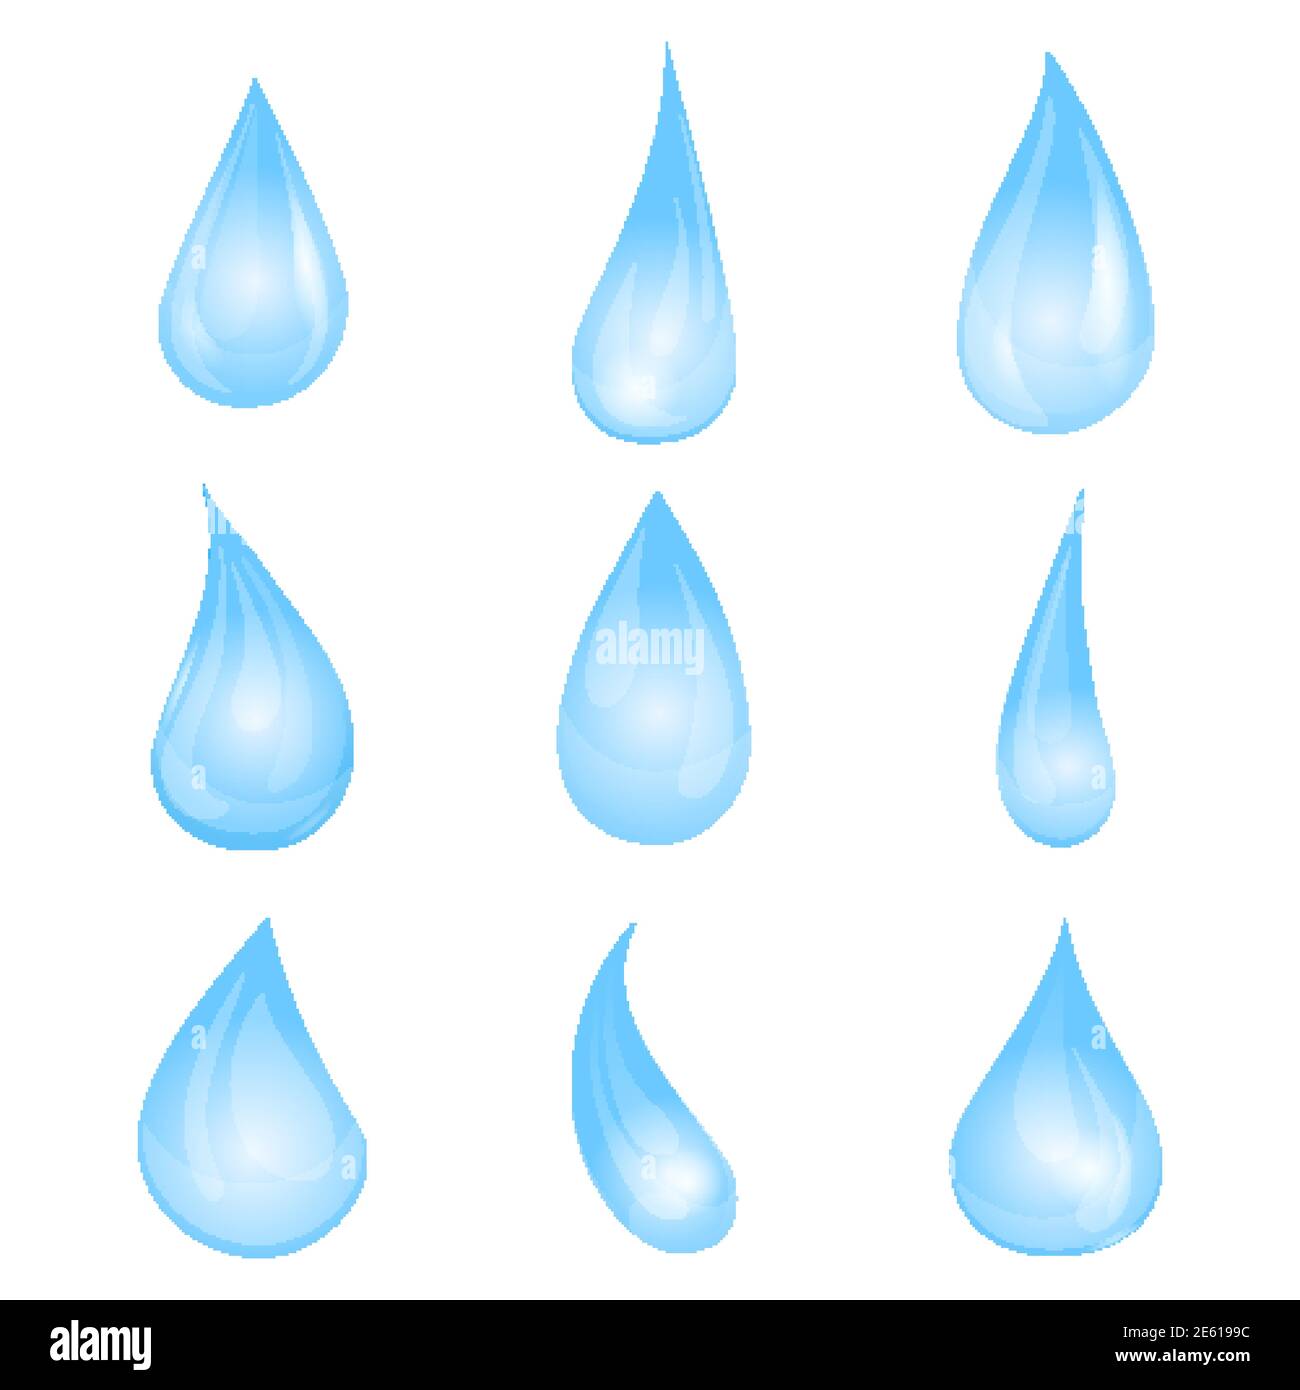 Juego de gotas de agua azul de dibujos animados. Ilustración vectorial  Imagen Vector de stock - Alamy